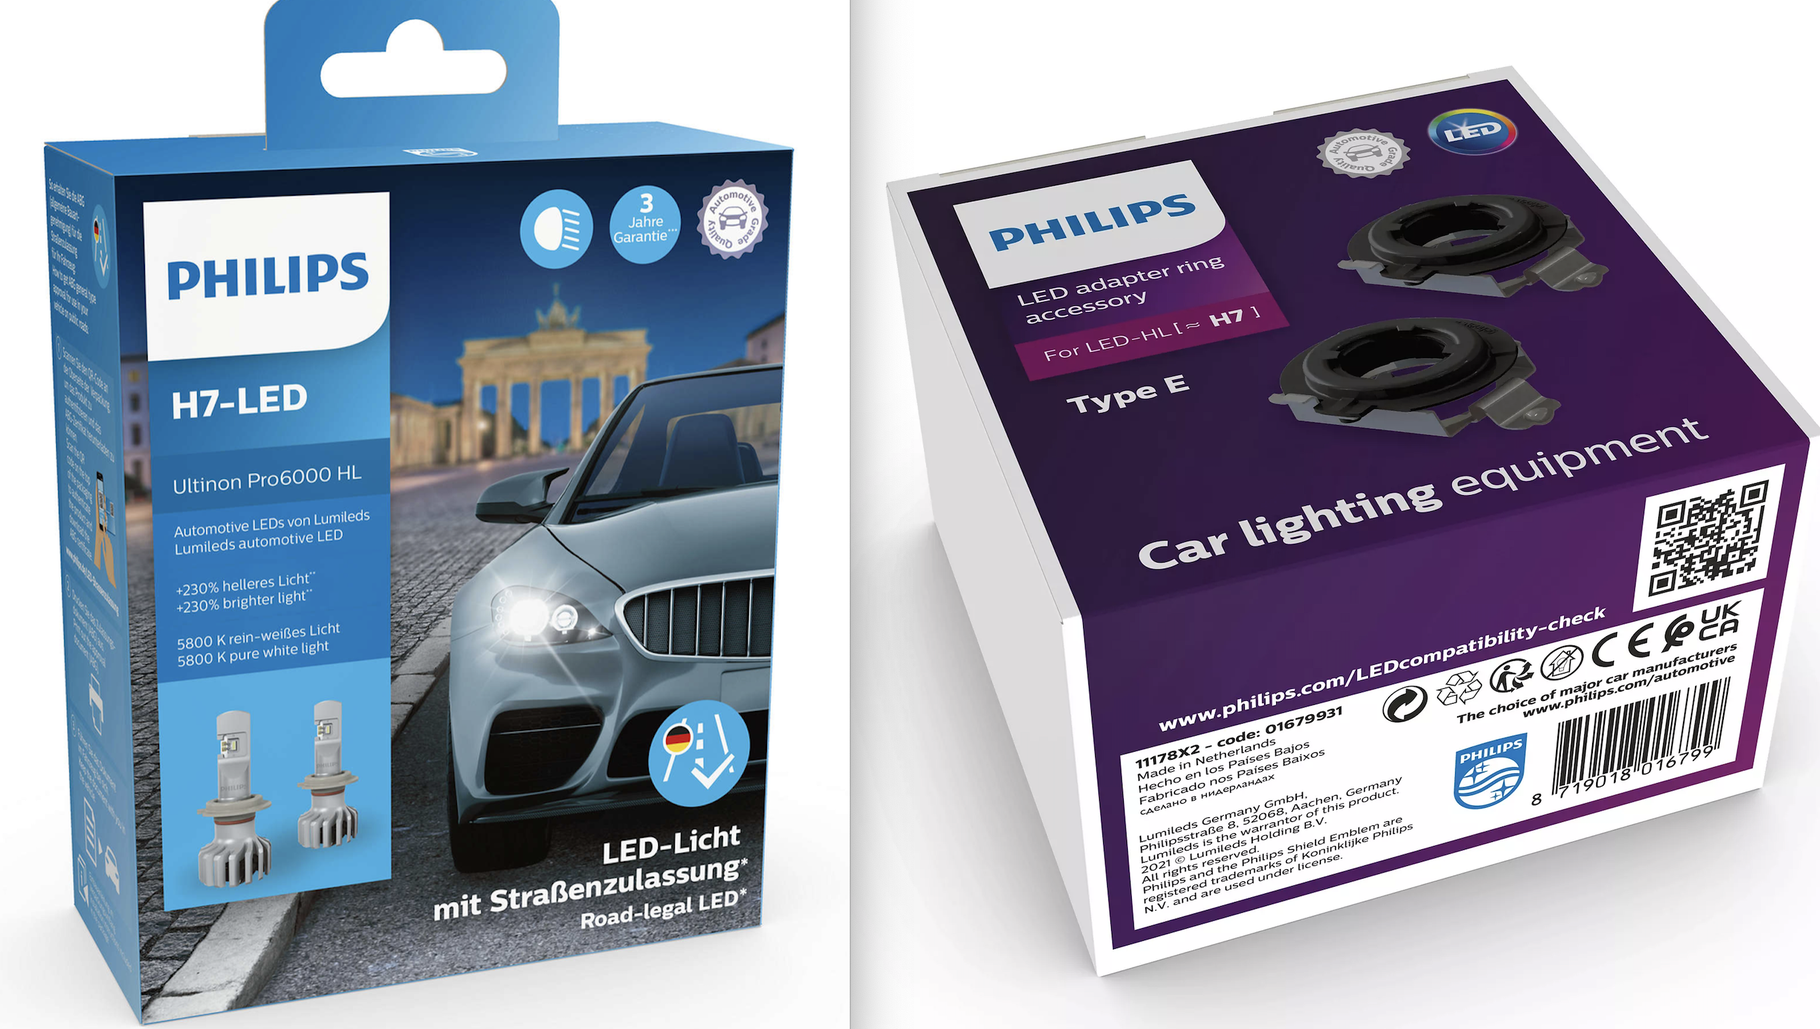 Philips Ultinon Pro6000 H7 LED Set für Mercedes V-Klasse W477 ab 2014 mit  Straßenzulassung